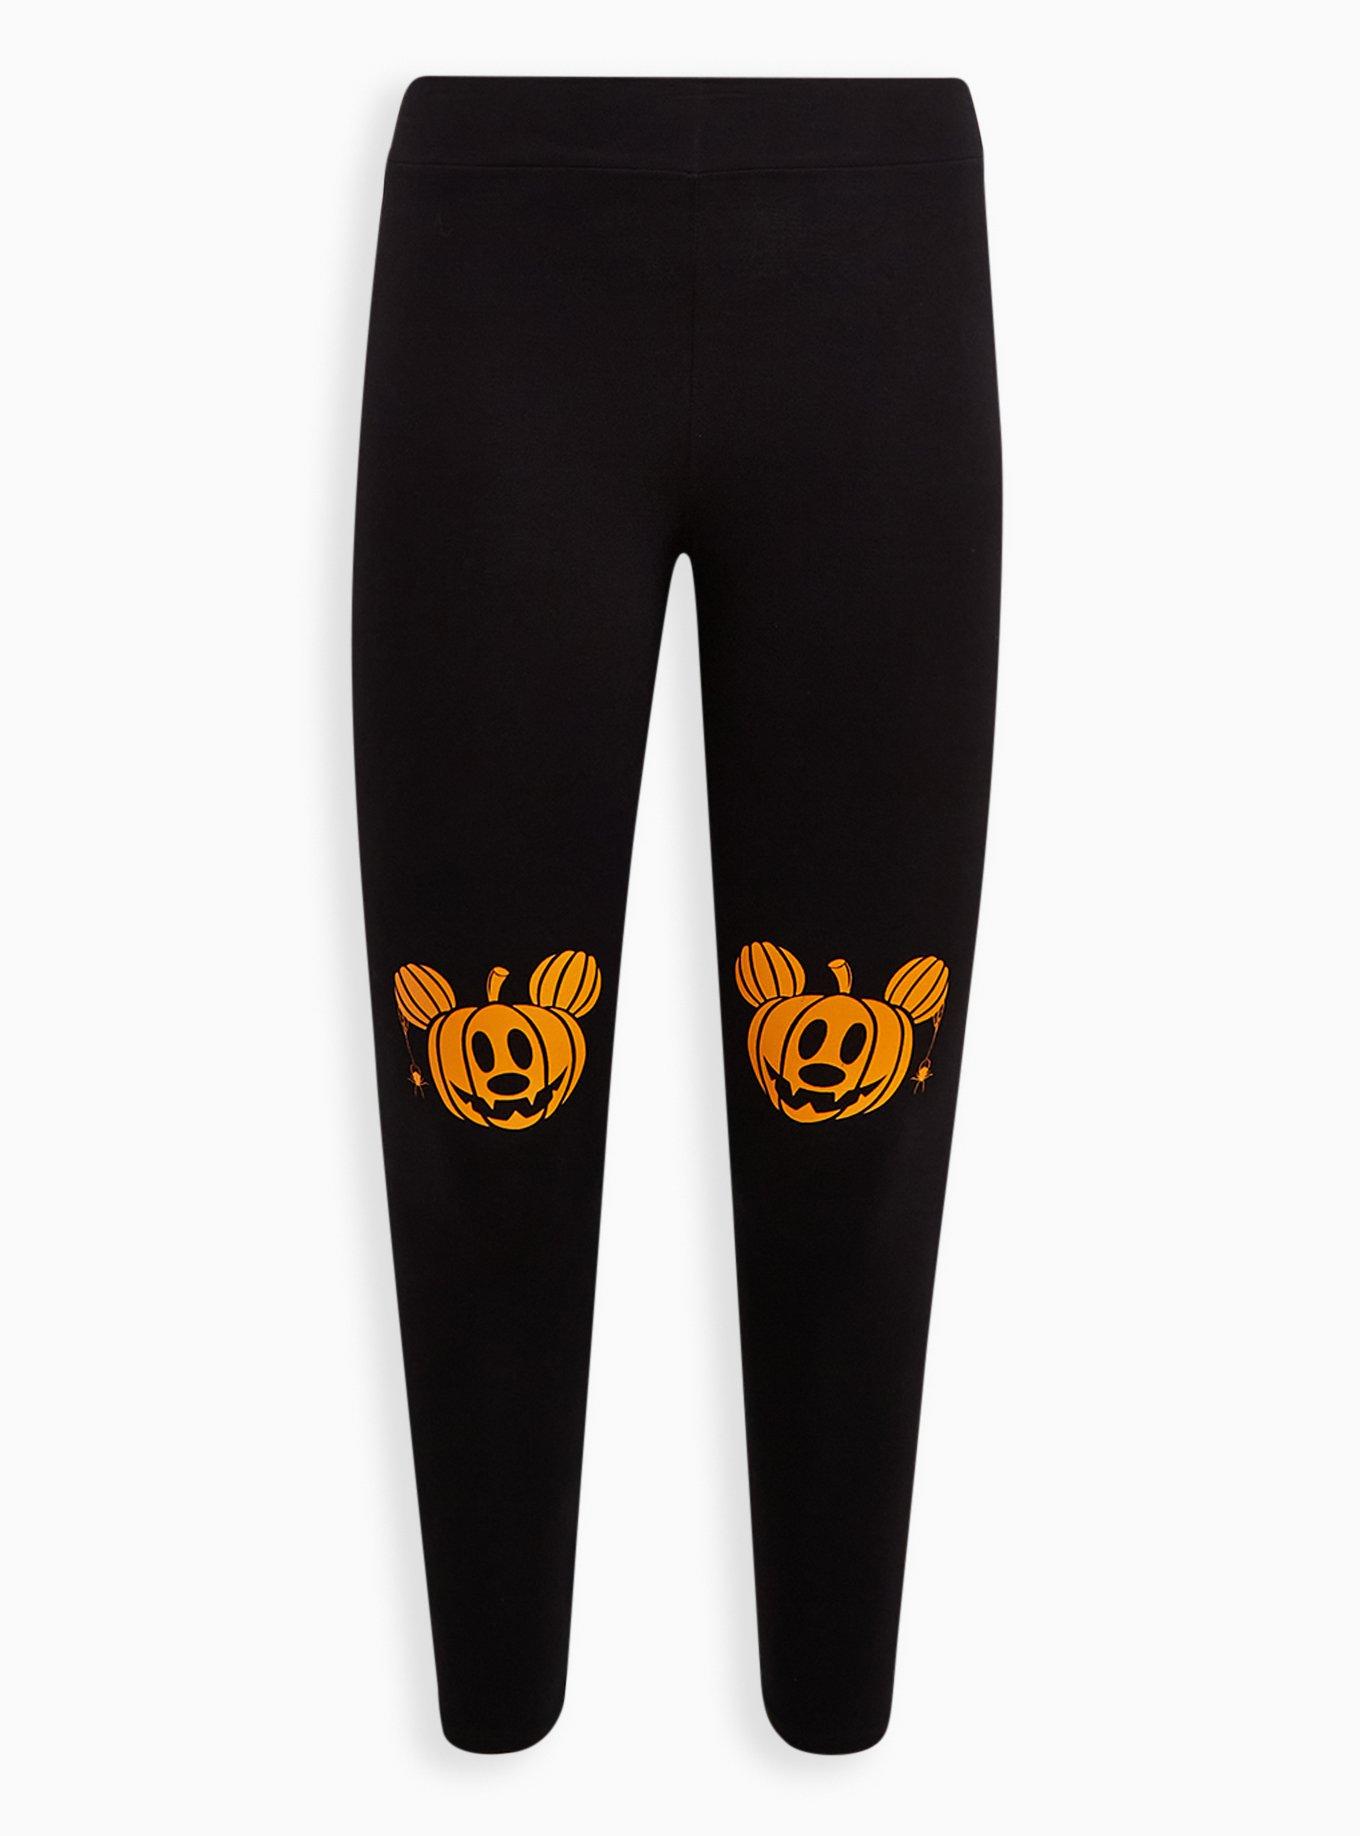 Plus Size - Disney Mickey Mouse Black Crop Legging - Torrid